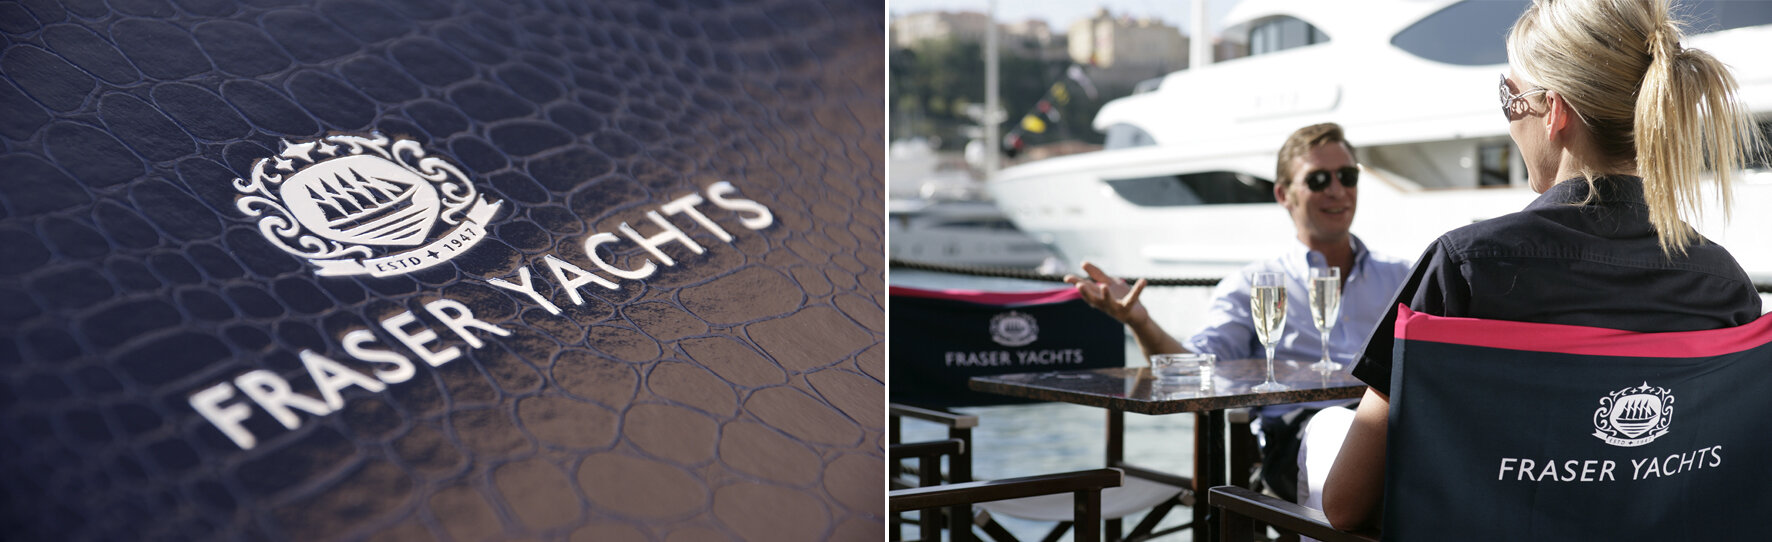 Fraser Yachts Monaco Andy Bain luxury branding design